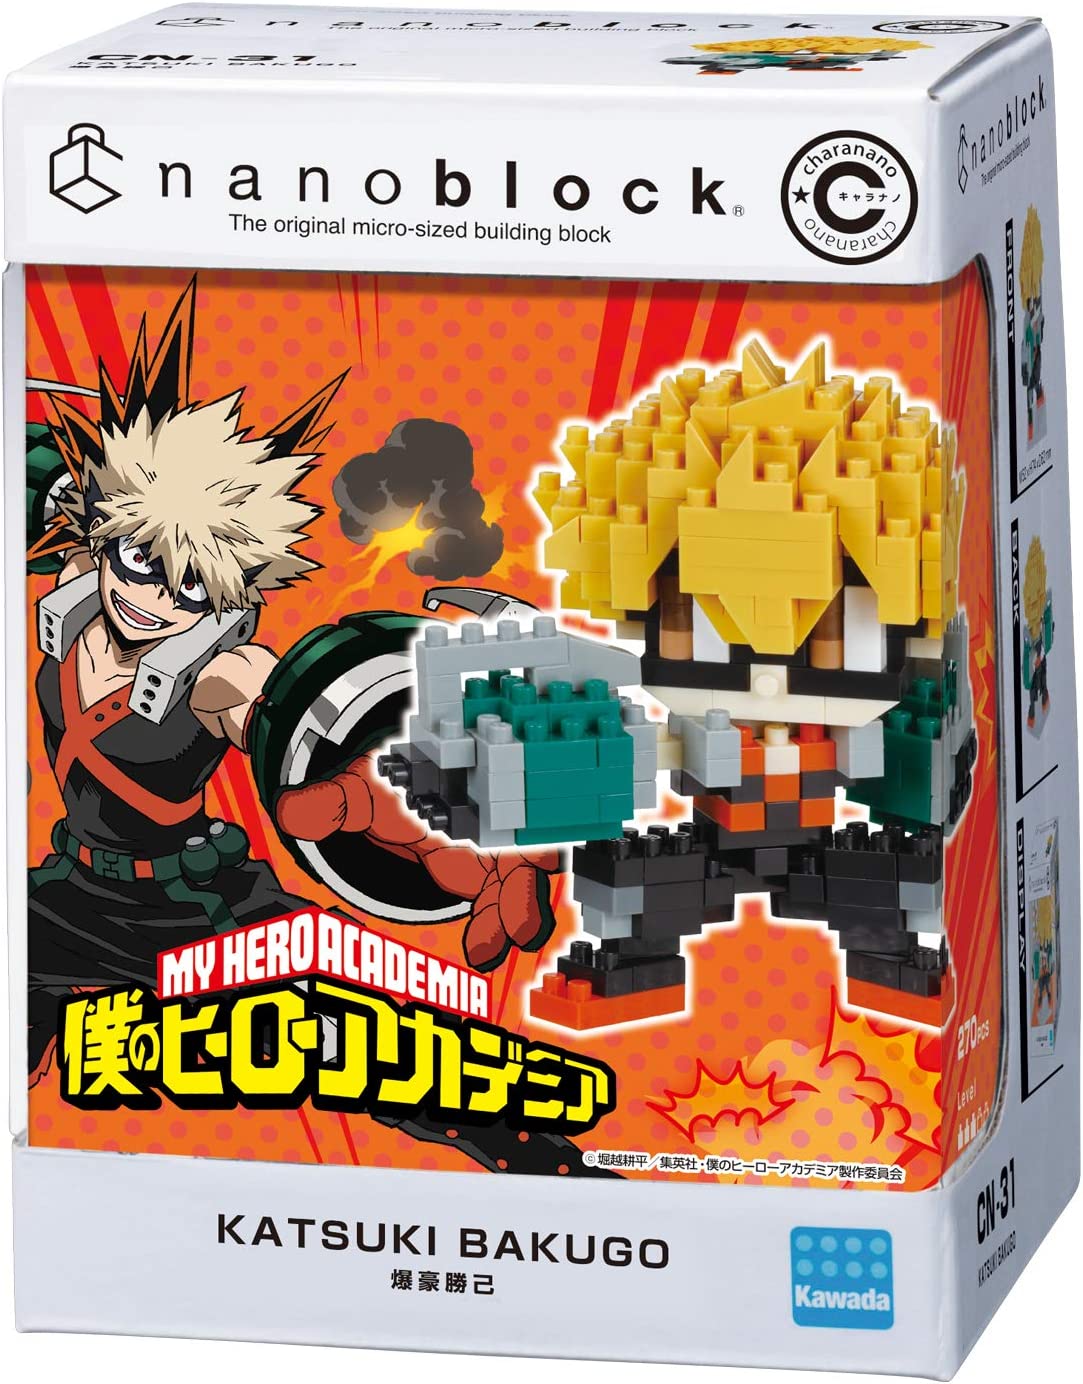 My Hero Academia Nanoblock Set - Katsuki Bakugo